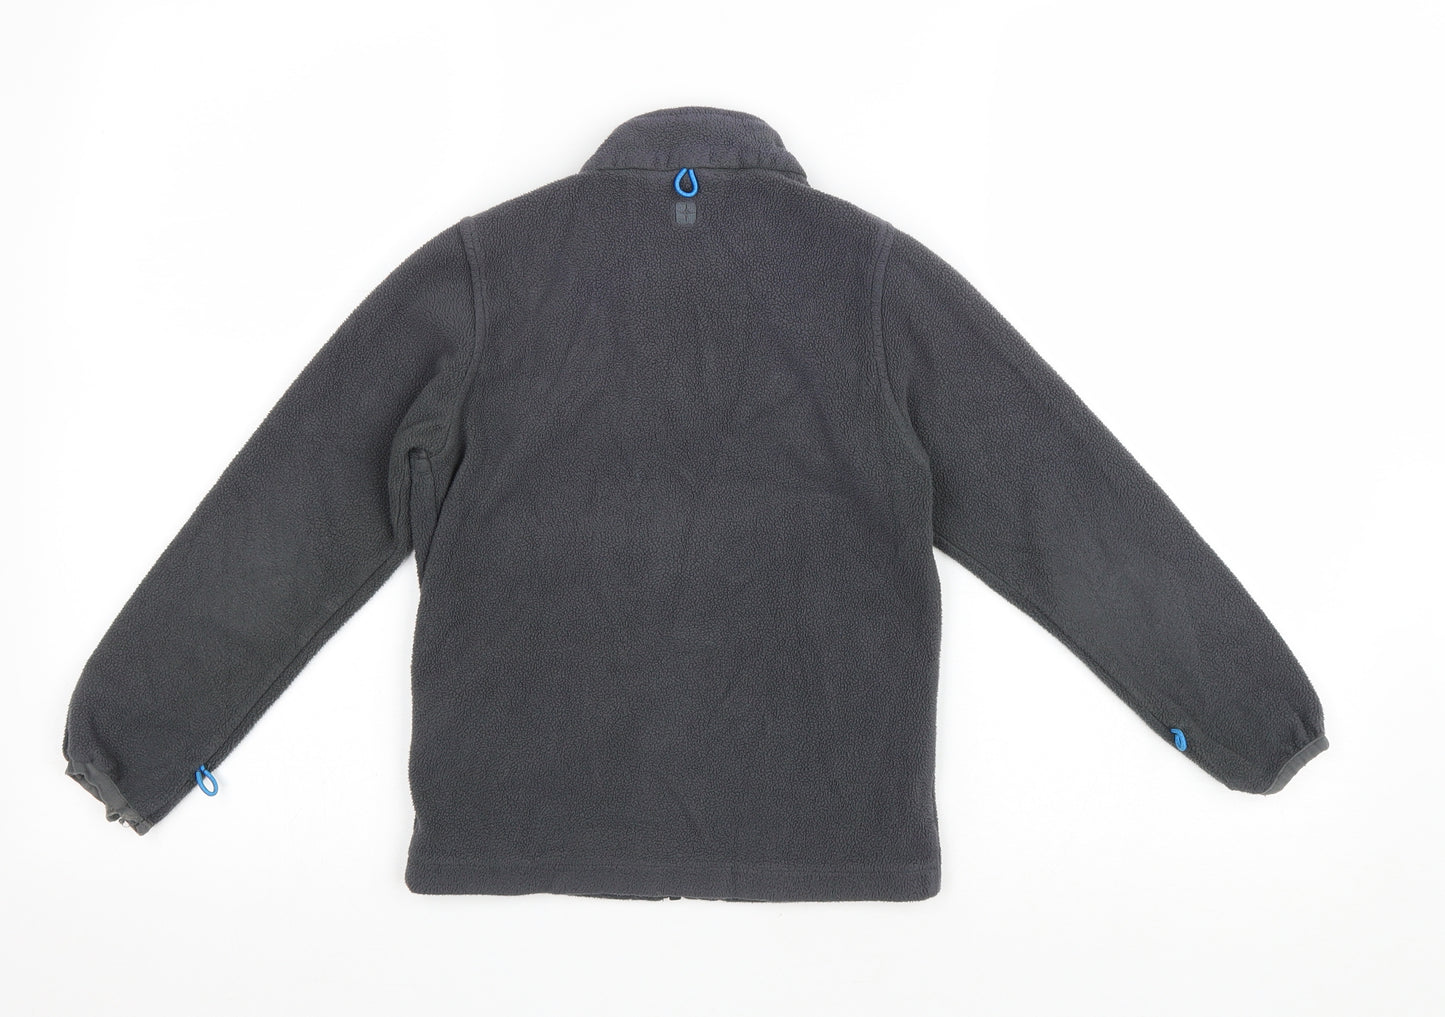 Mountain Warehouse Boys Grey Jacket Size 7-8 Years Zip